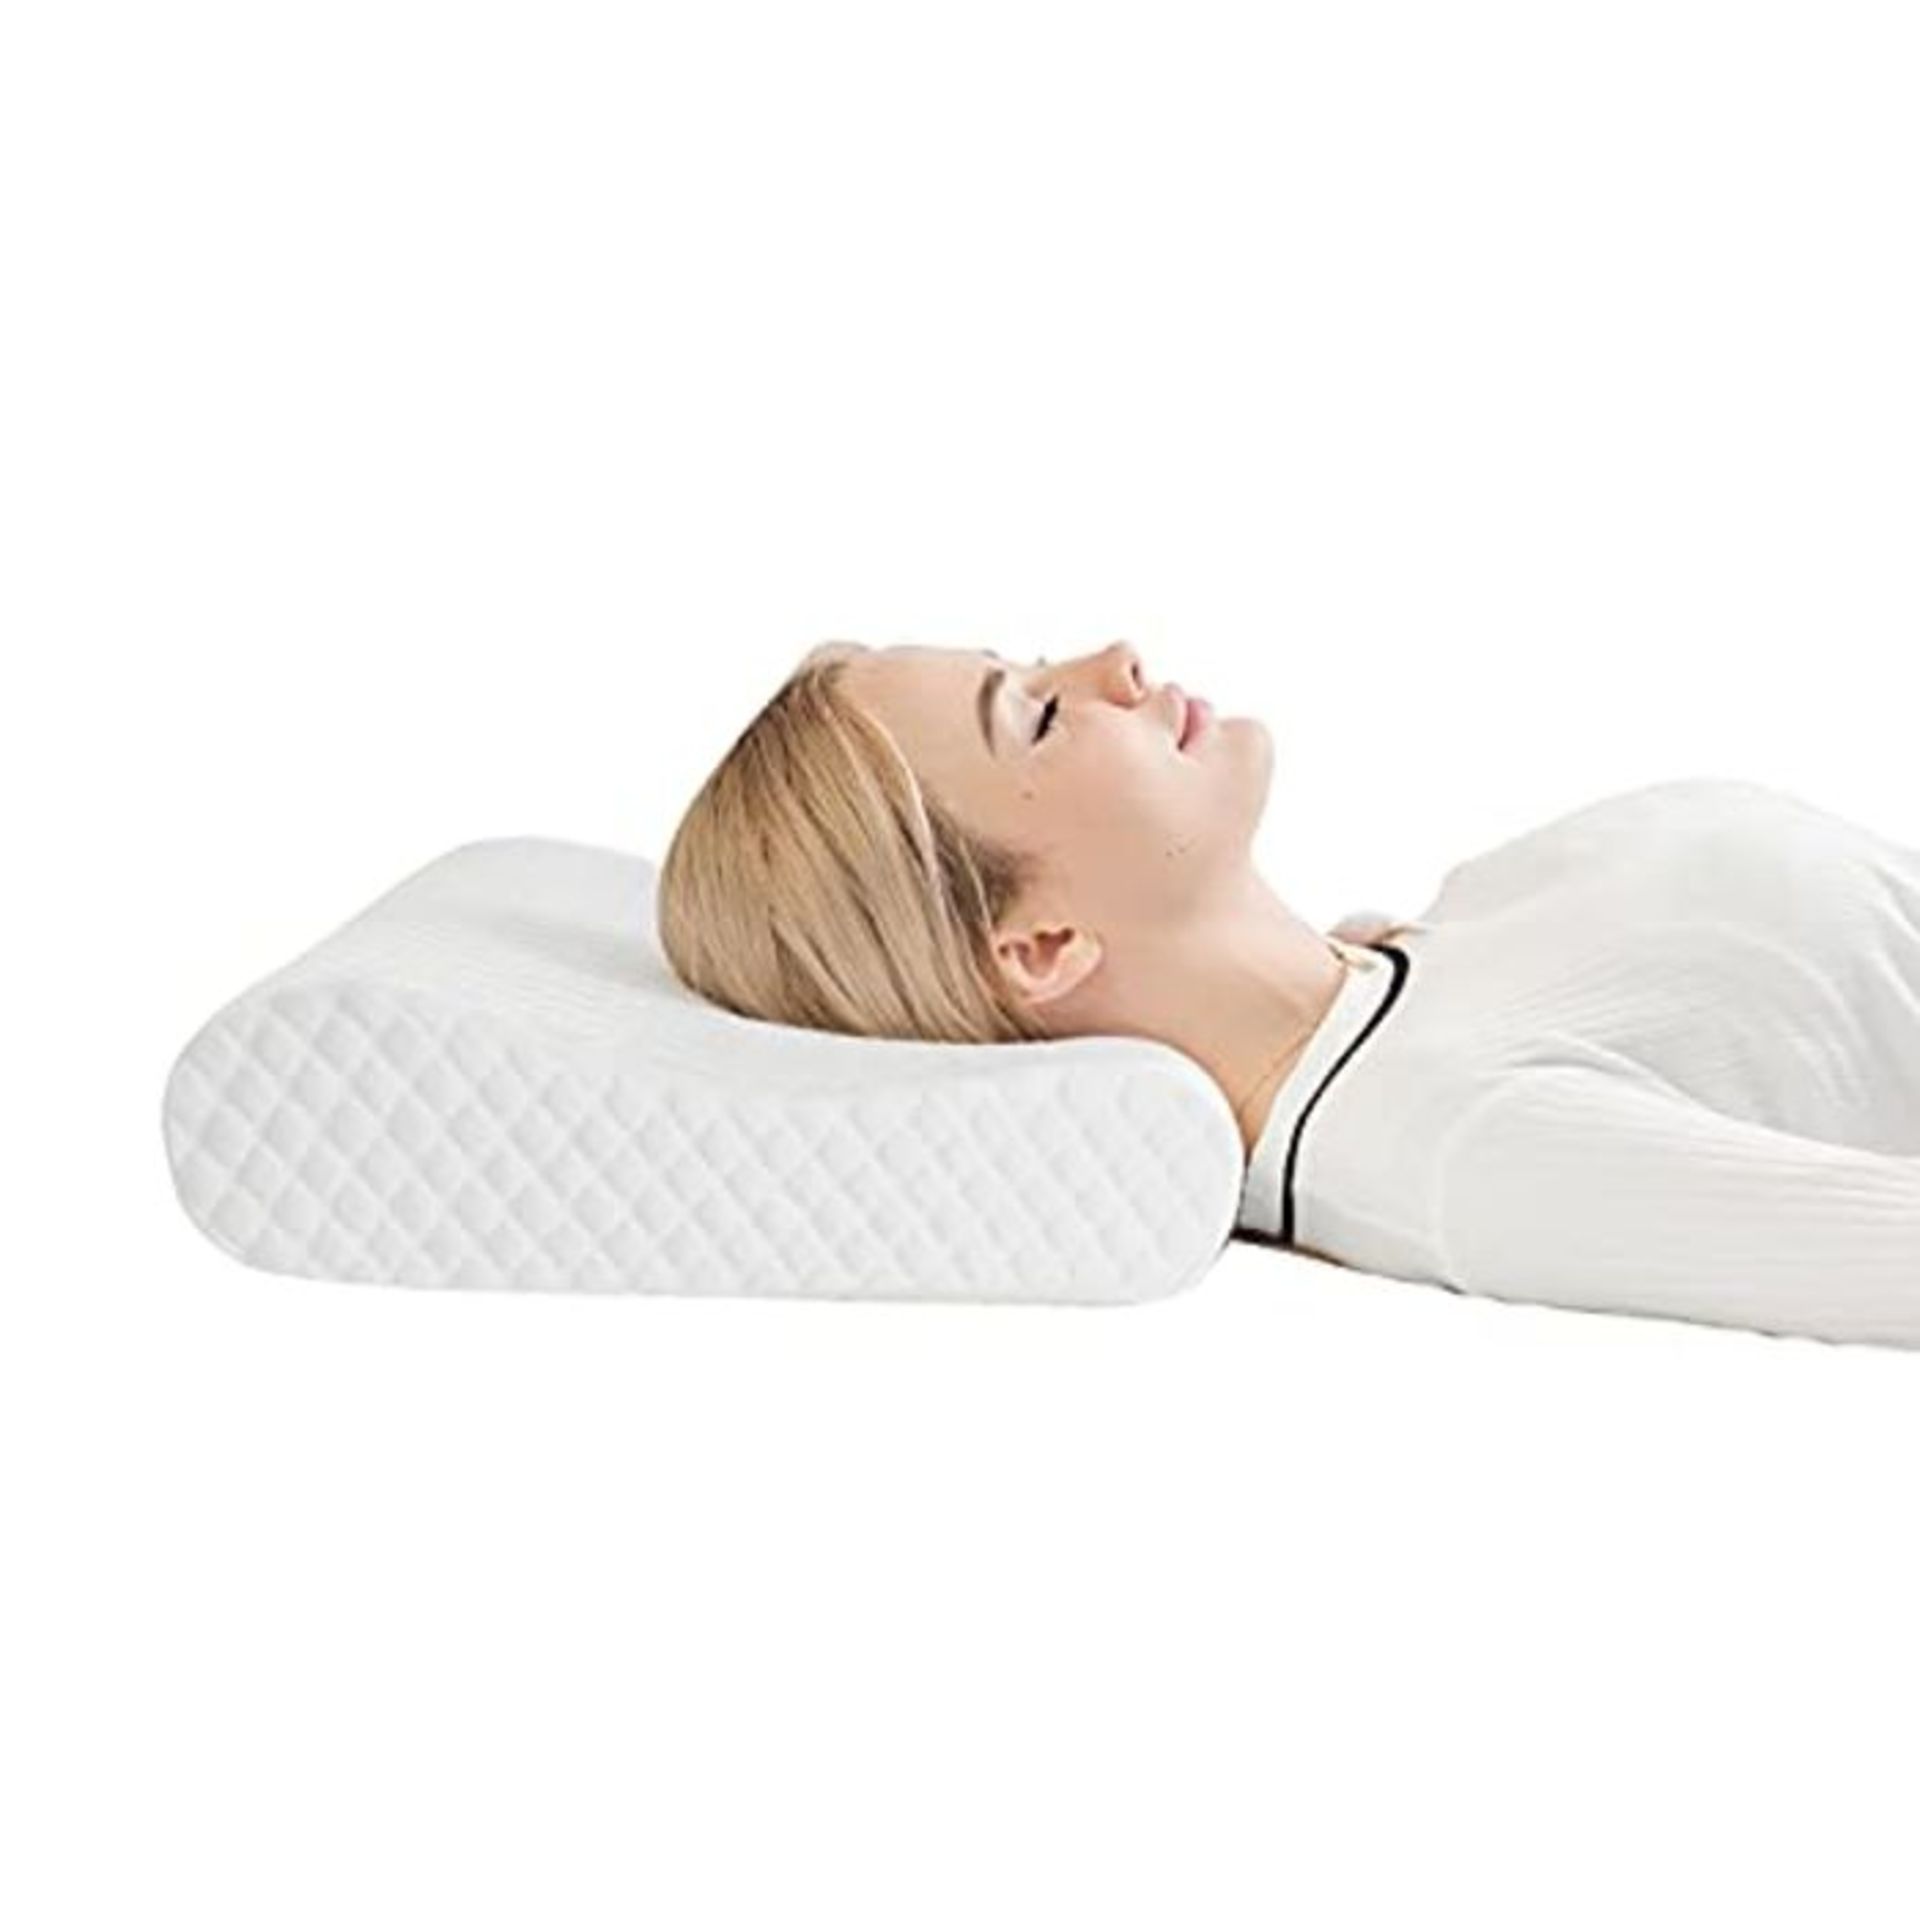 TAMPOR Orthopedic Contour Pillow Memory Foam Pillow Ergonomic Neck Support Pillow Deep